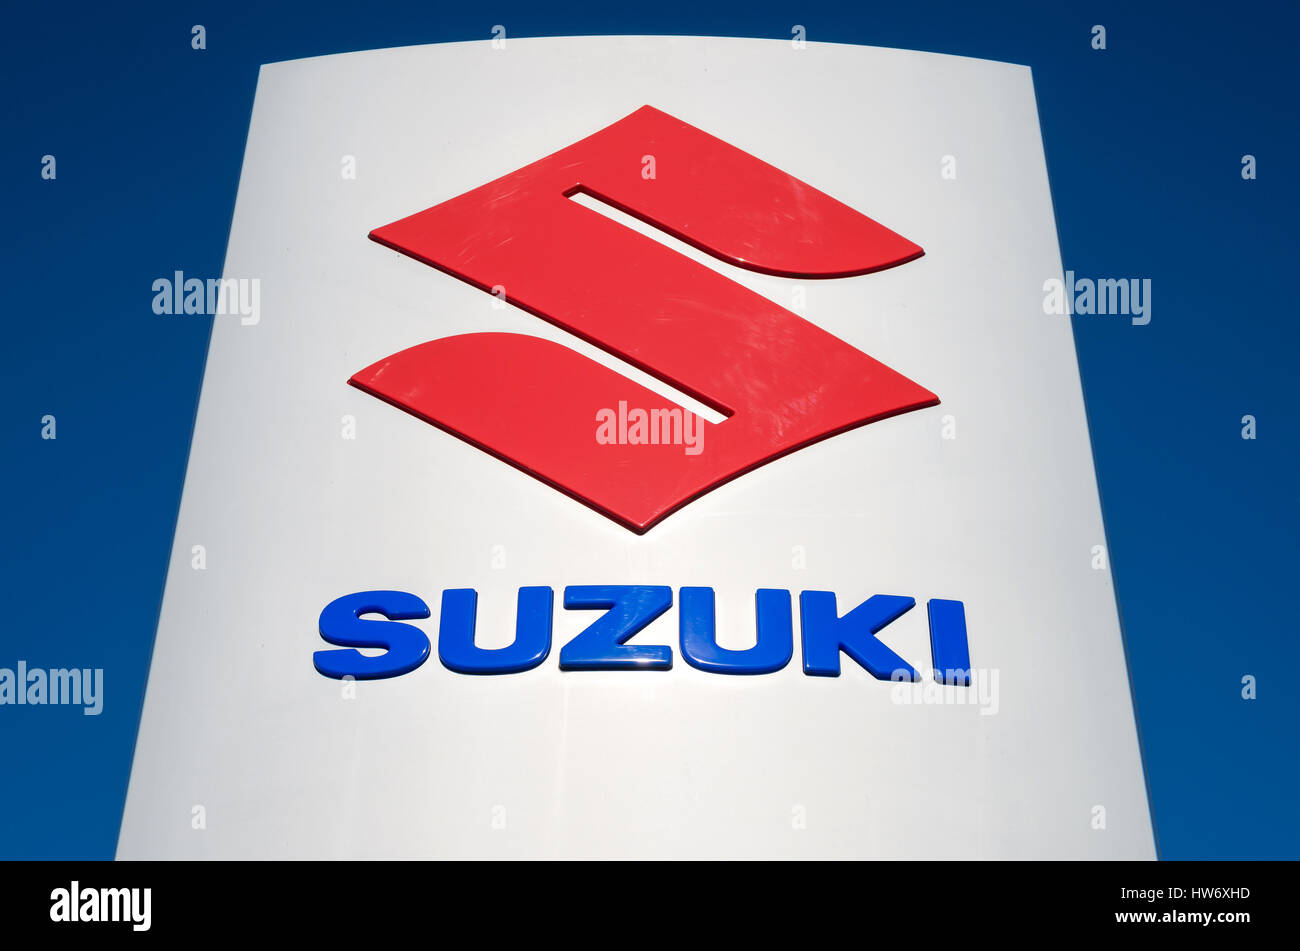 https://c8.alamy.com/comp/HW6XHD/suzuki-dealership-sign-against-blue-sky-HW6XHD.jpg